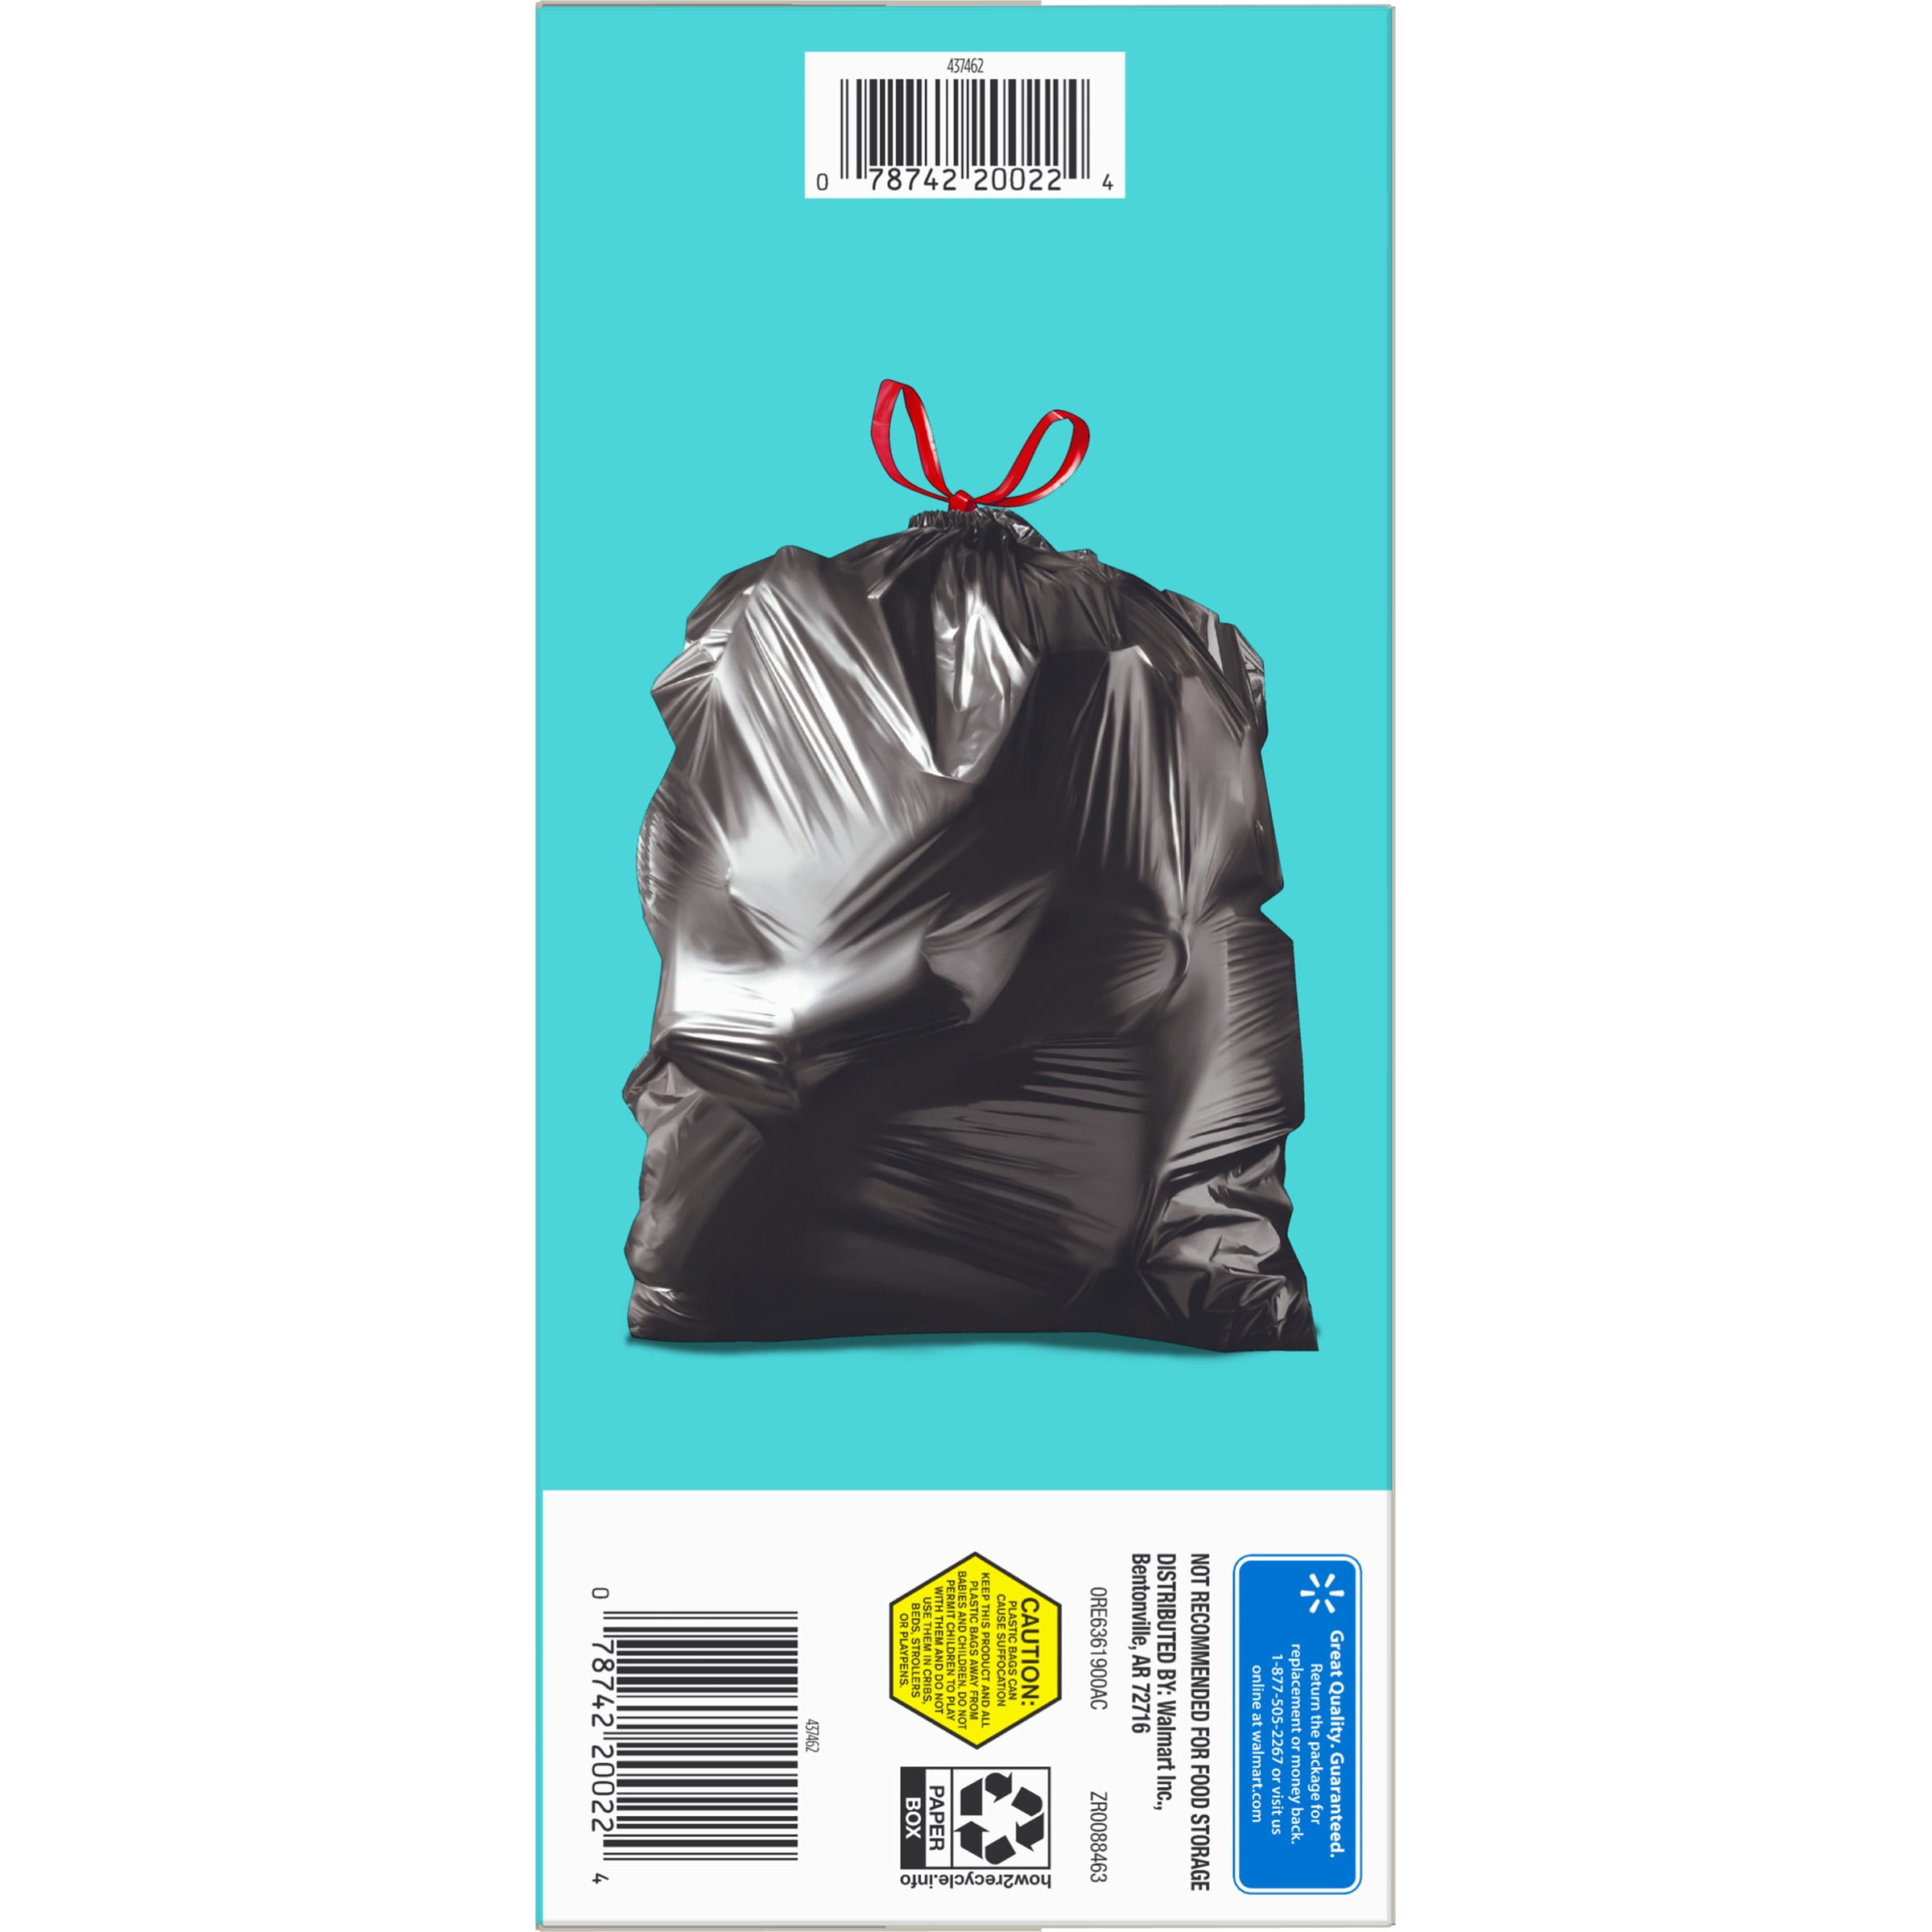 30 Gal Drawstring Black Garbage Bags (80 Count) - Blue Sky Trading